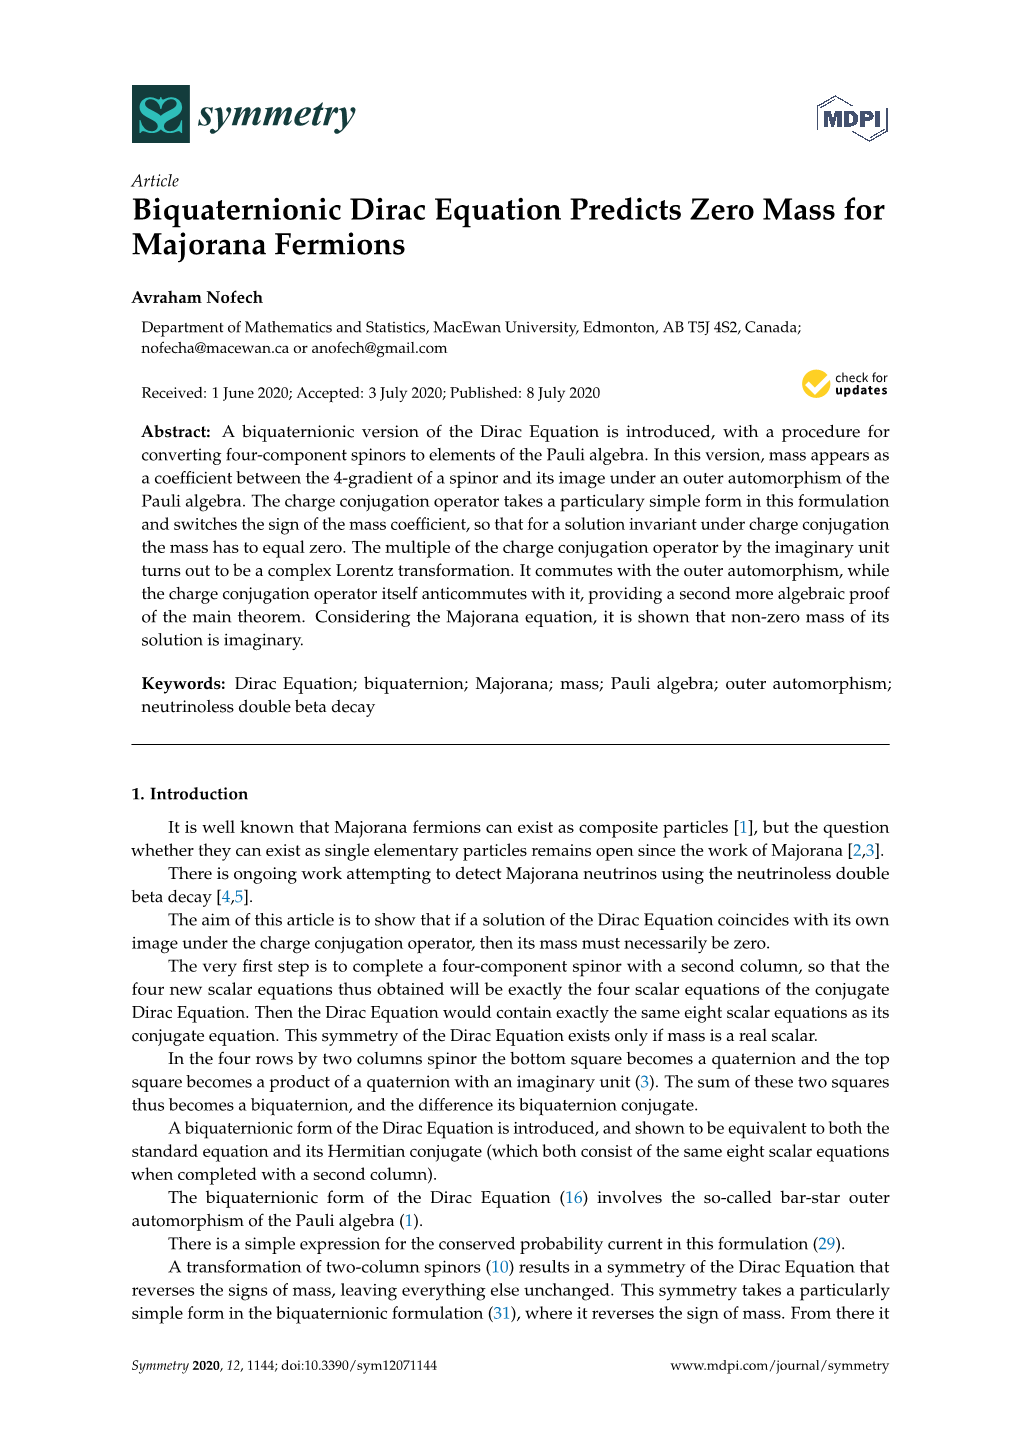 Biquaternionic Dirac Equation Predicts Zero Mass for Majorana Fermions